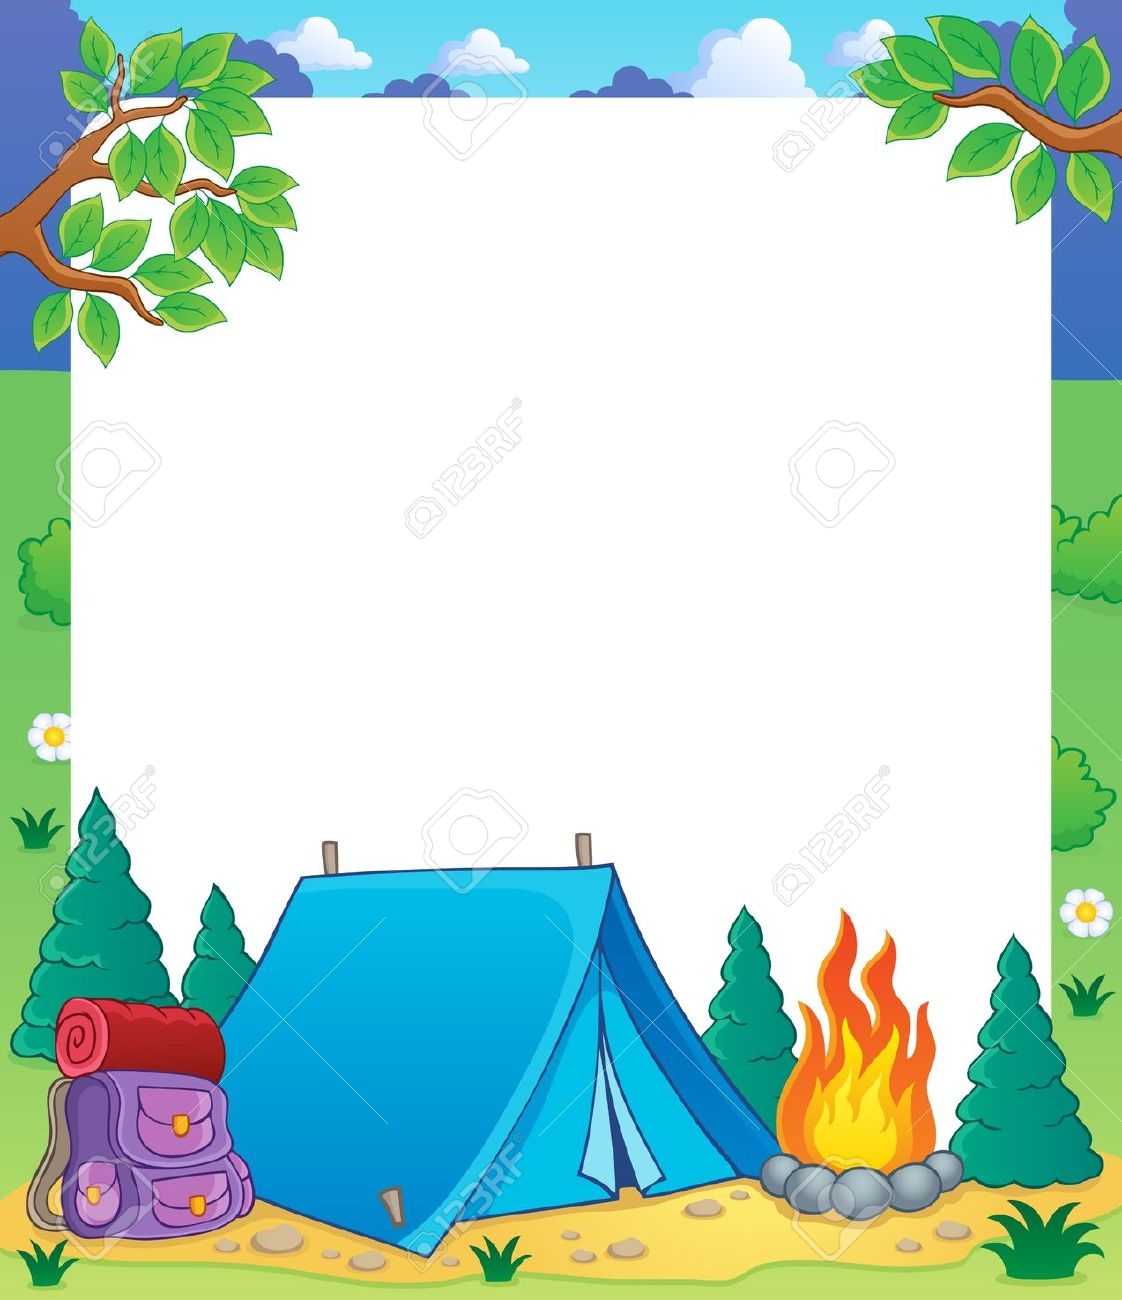 Download Campfire clipart border, Campfire border Transparent FREE ...